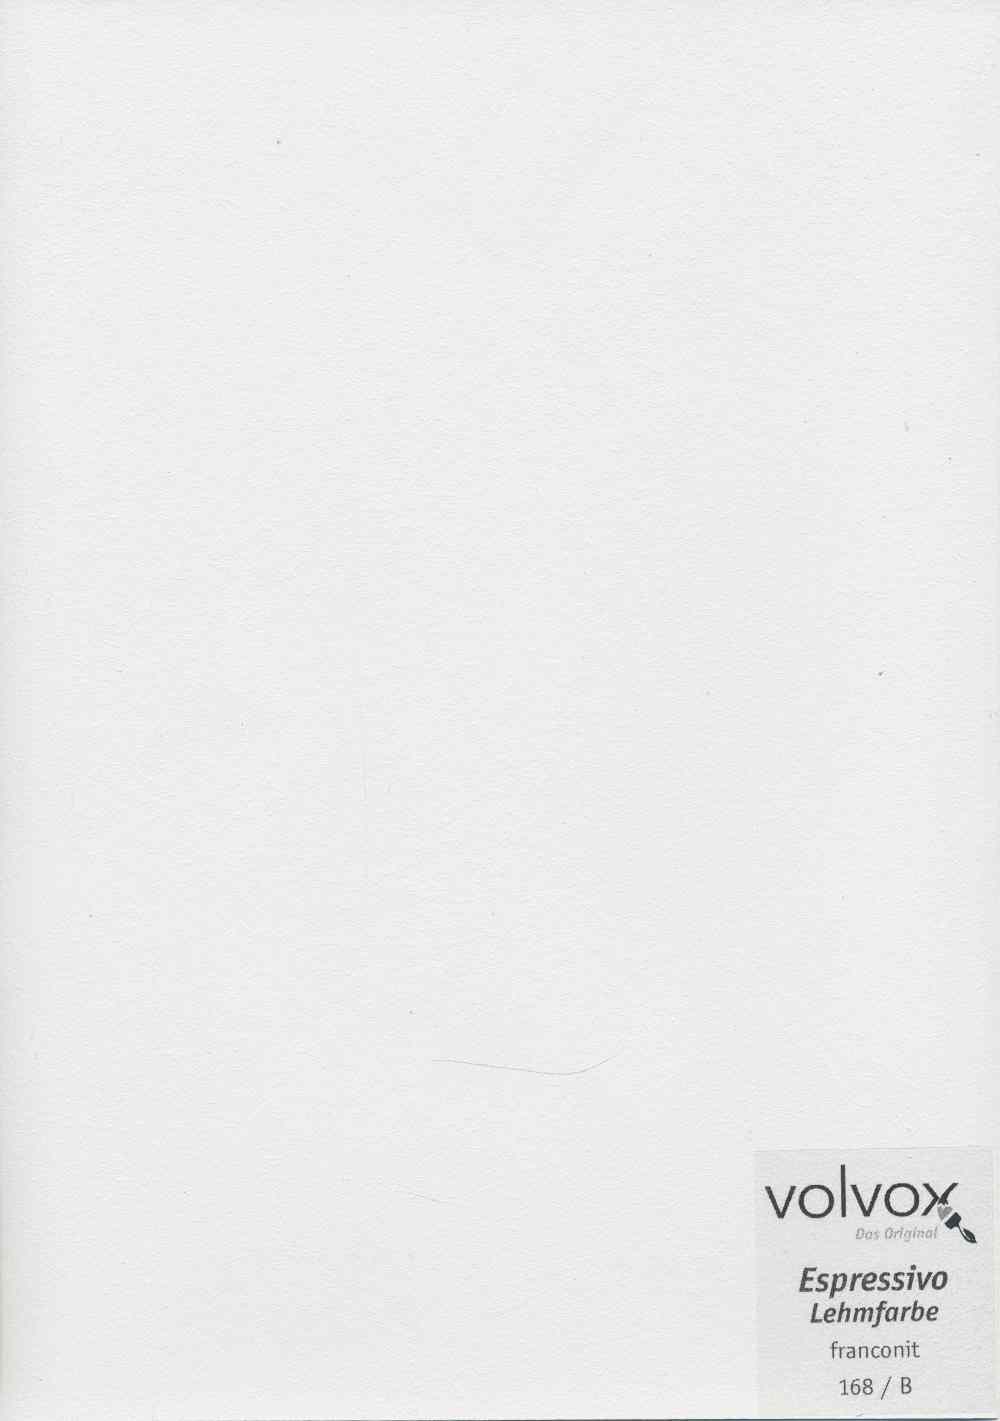 Volvox Espressivo Lehmfarbe 168 franconit 